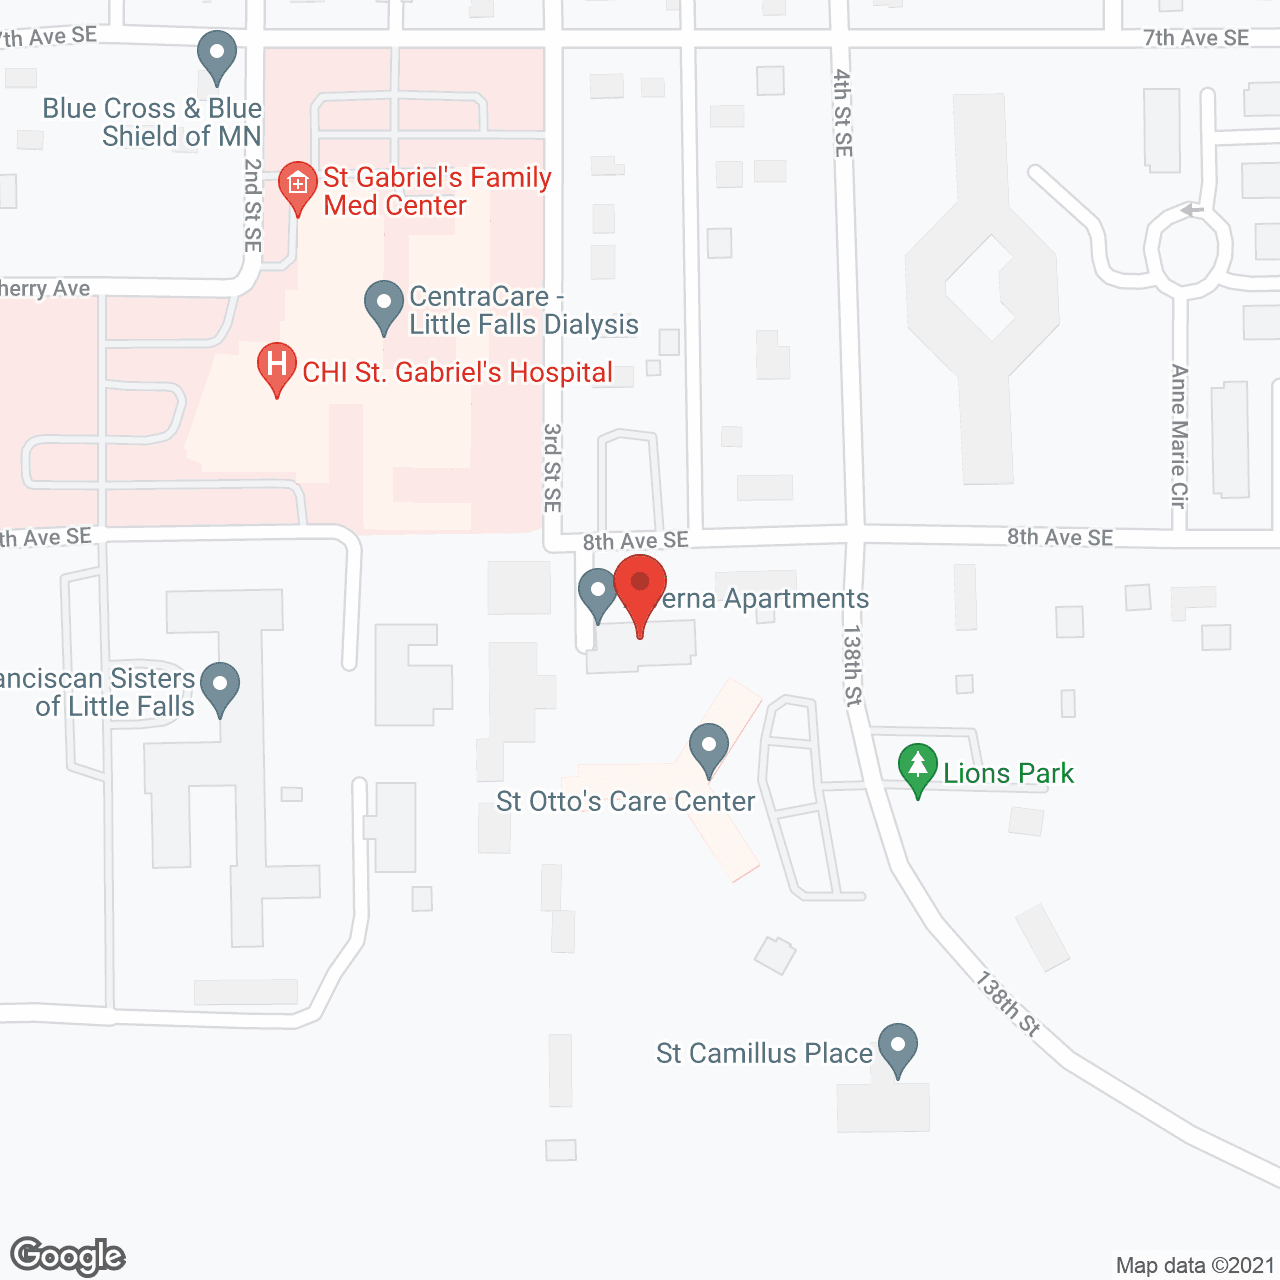 Alverna Apartments in google map